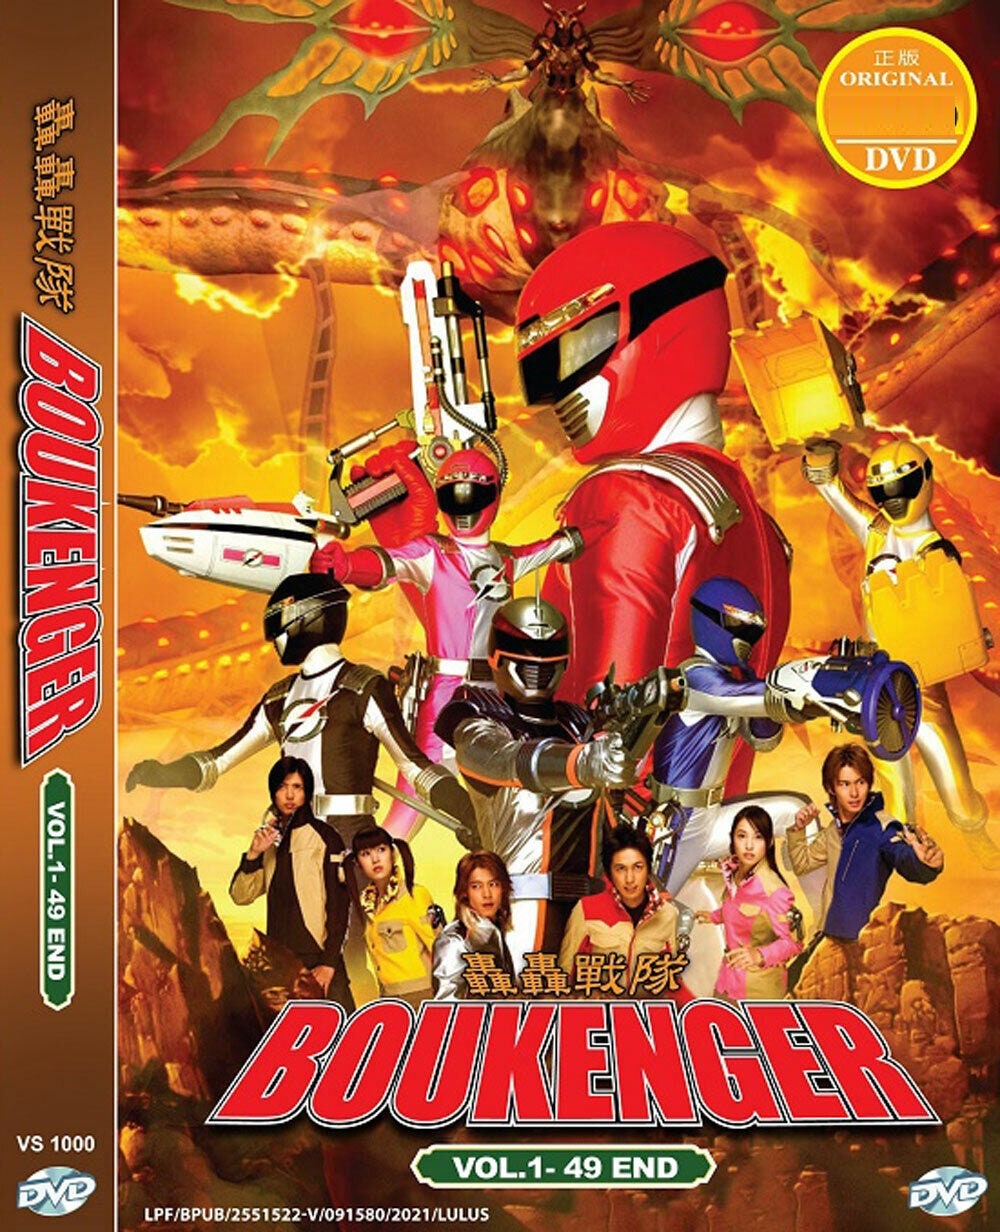 DVD Anime Power Rangers Tensou Sentai Goseiger TV Series Vol 1-50+